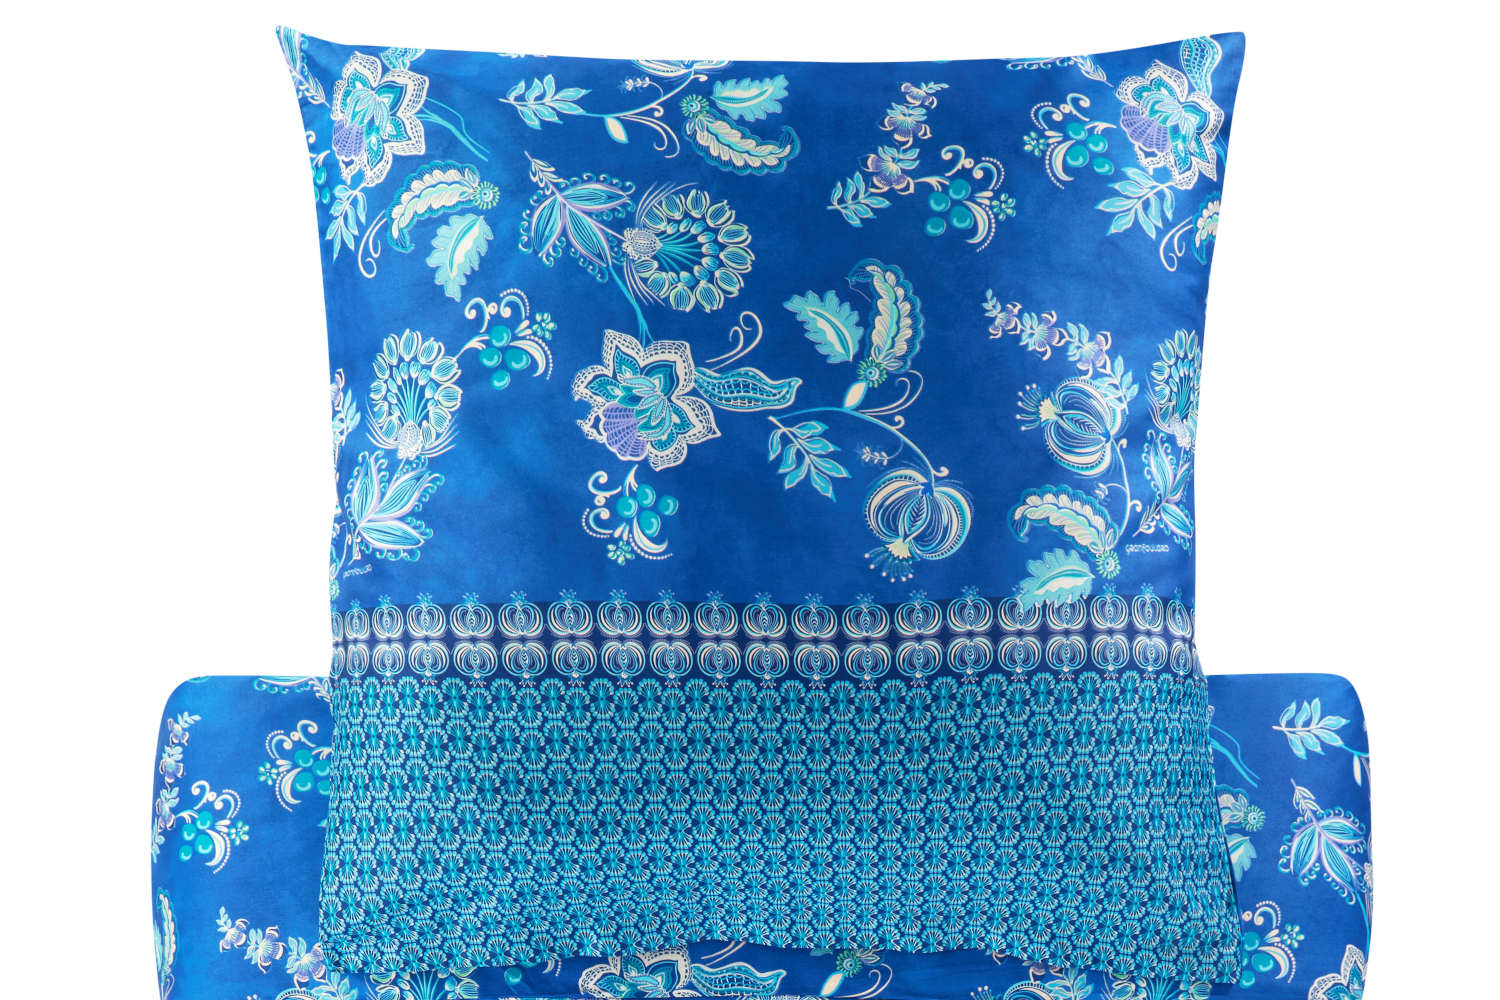 Bassetti Satin Bettwäsche Chiaia blau aus 100% Baumwolle, 135x200 cm 